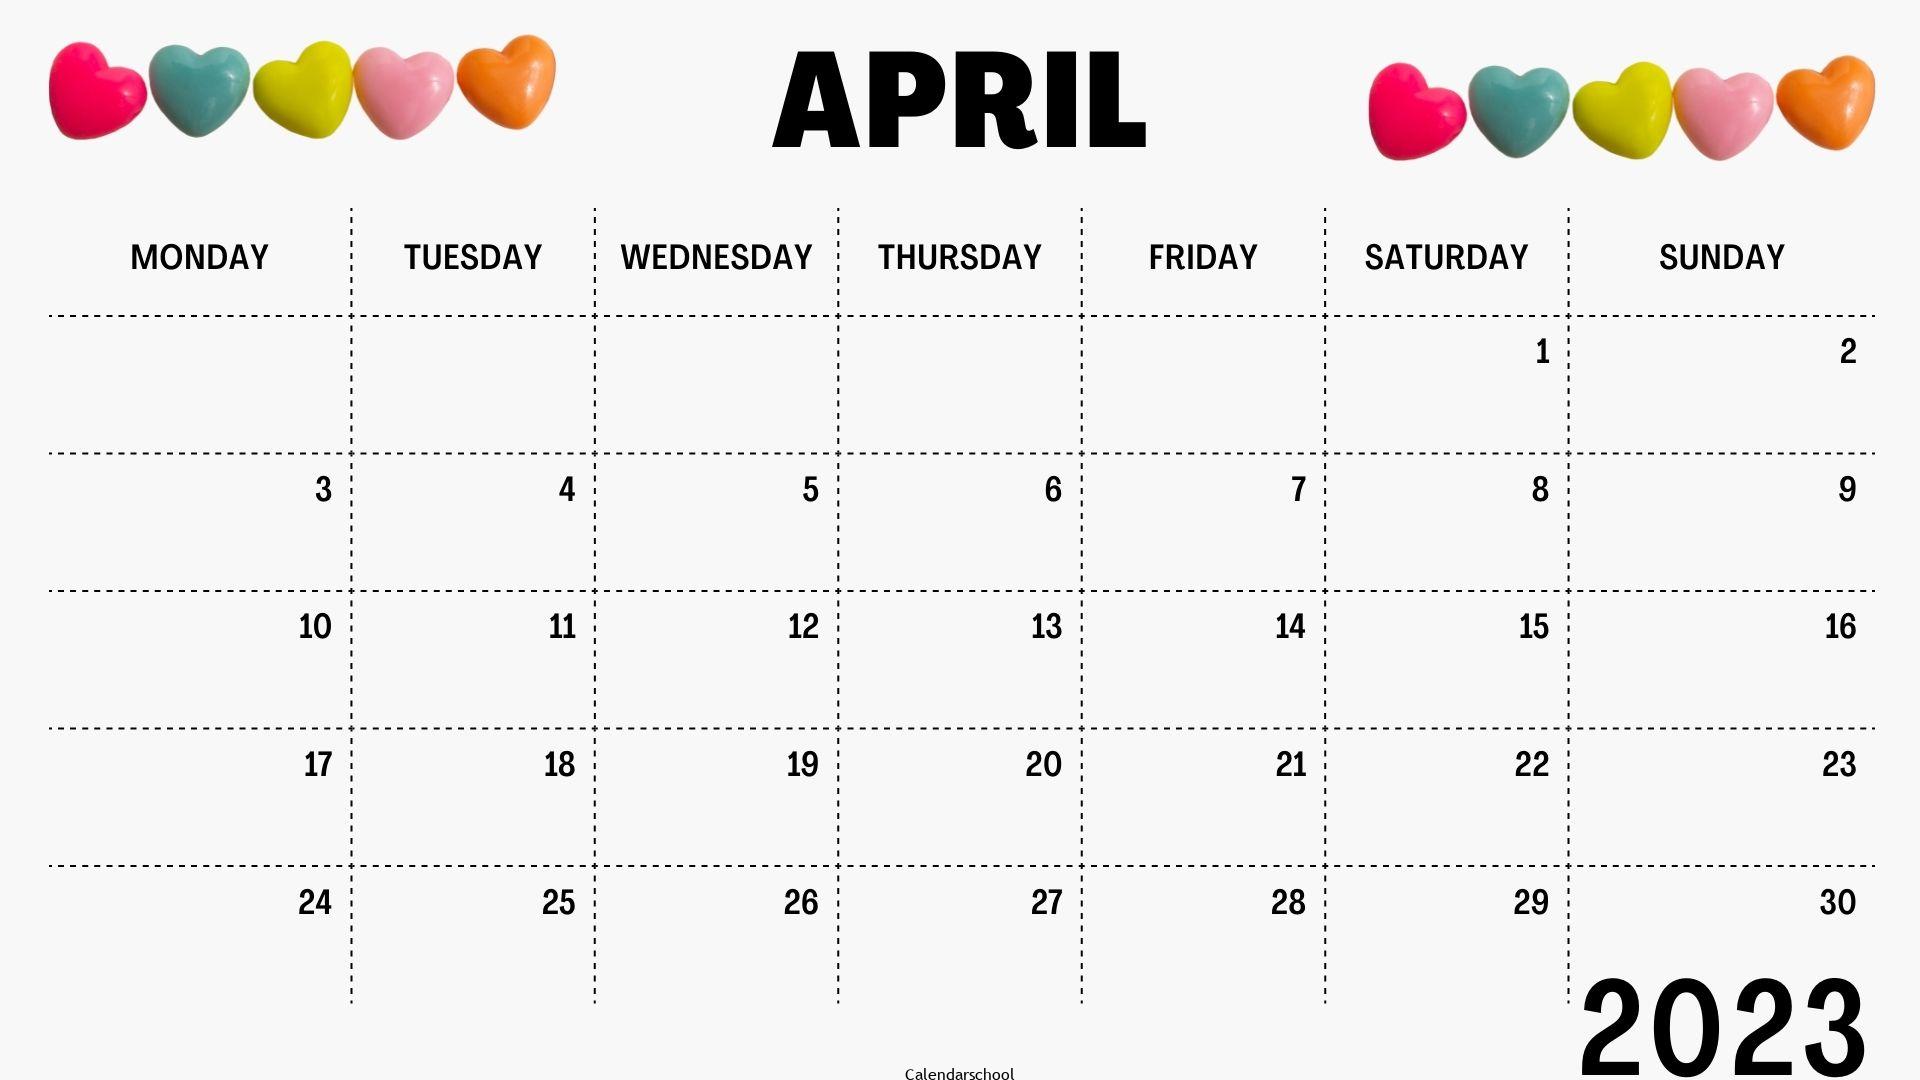 Calendar April 2023 Printable